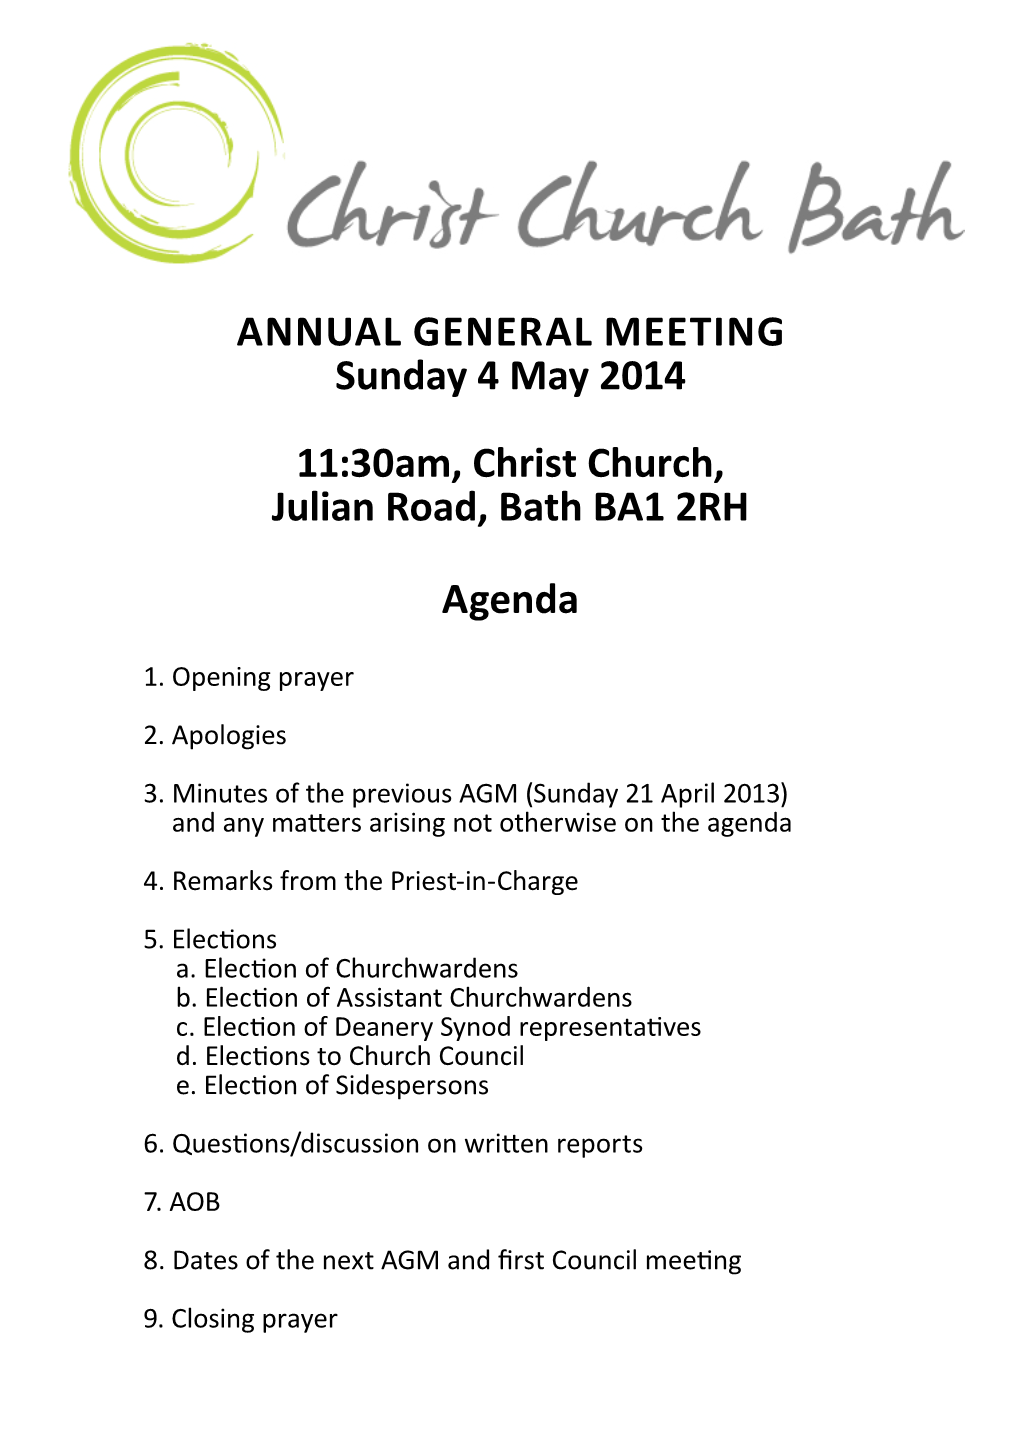 Annual General Meeting Sunday 4 May 2014 11:30Am, Christ Church, Julian Road, Bath BA1 2RH